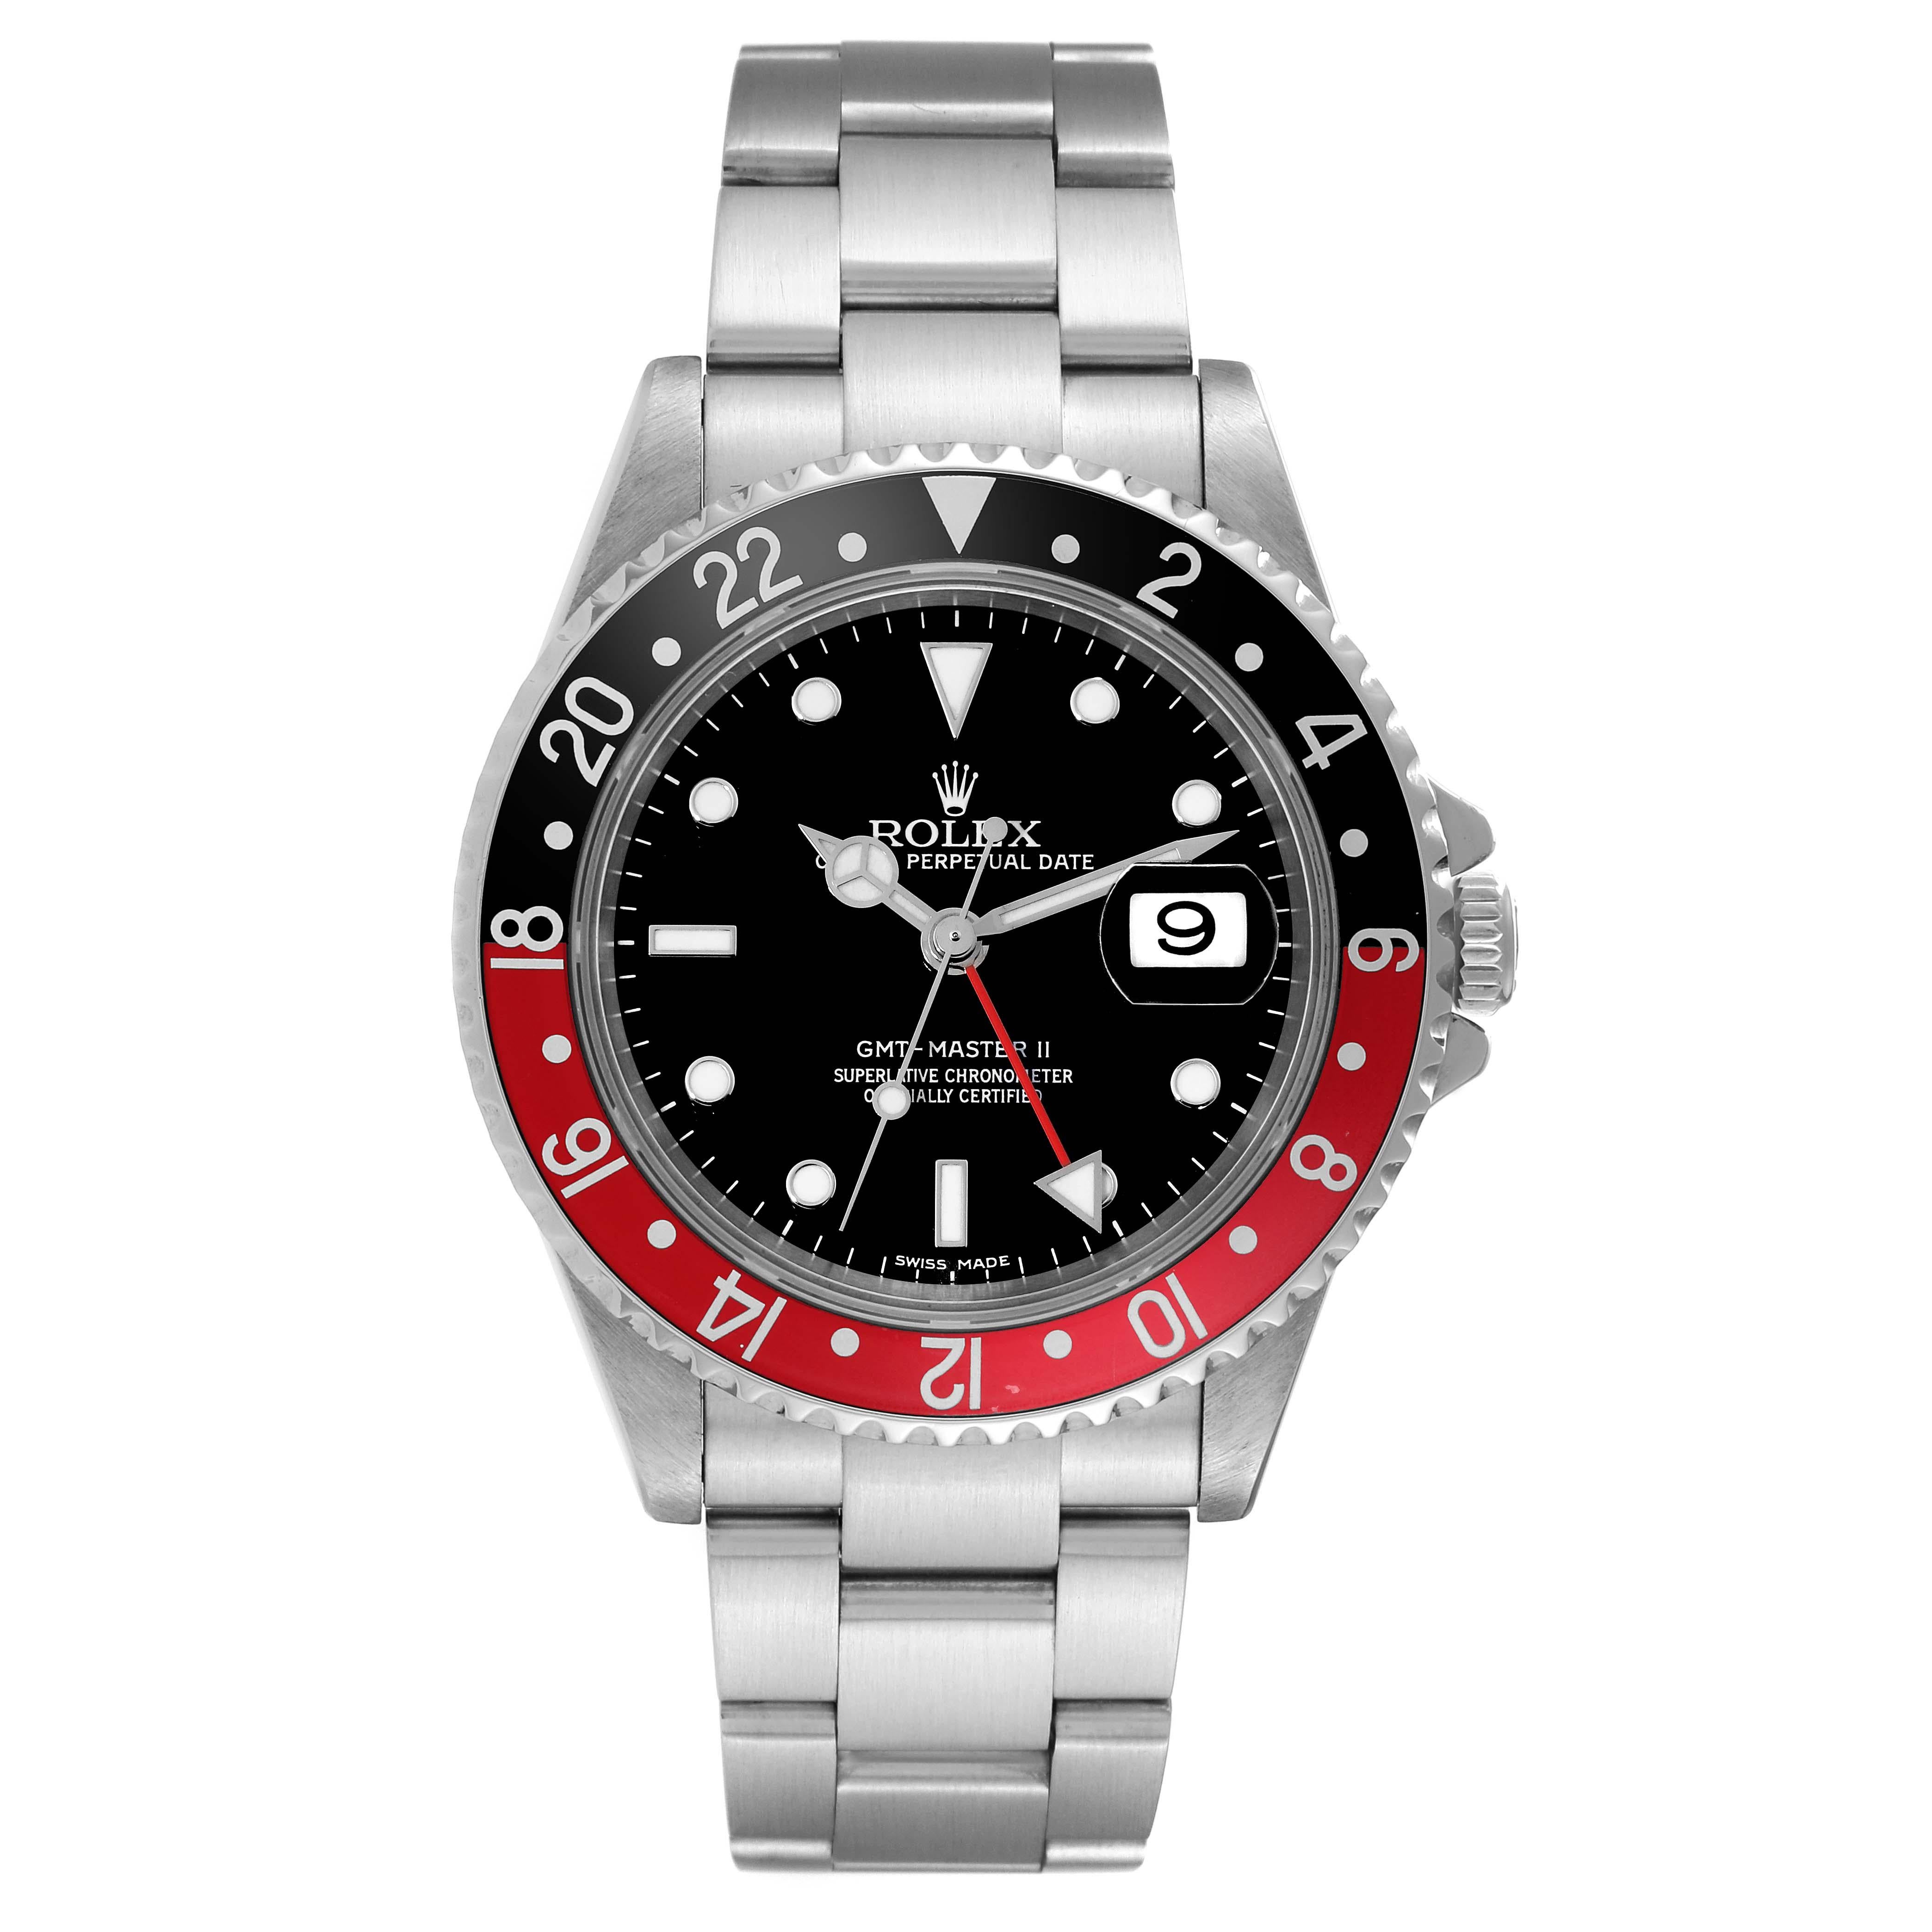 Rolex GMT Master II Black Red Coke Bezel Error Dial Steel Watch 16710 Box Papers 3